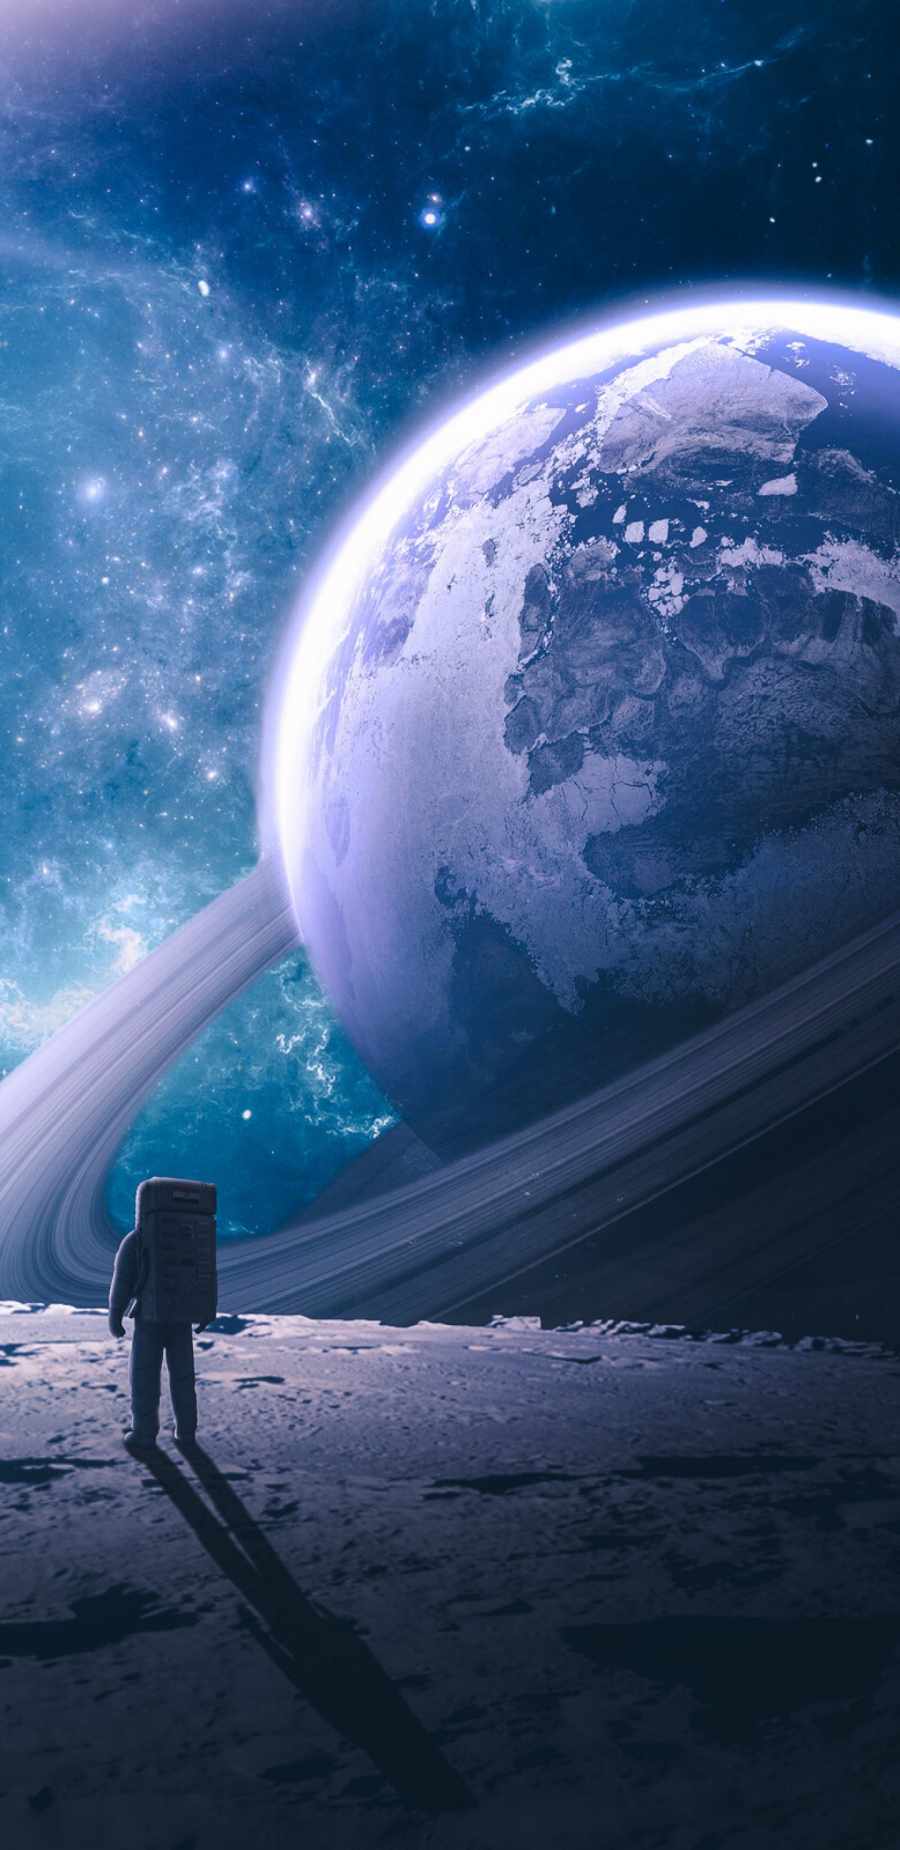 Space Explorer iPhone Wallpaper